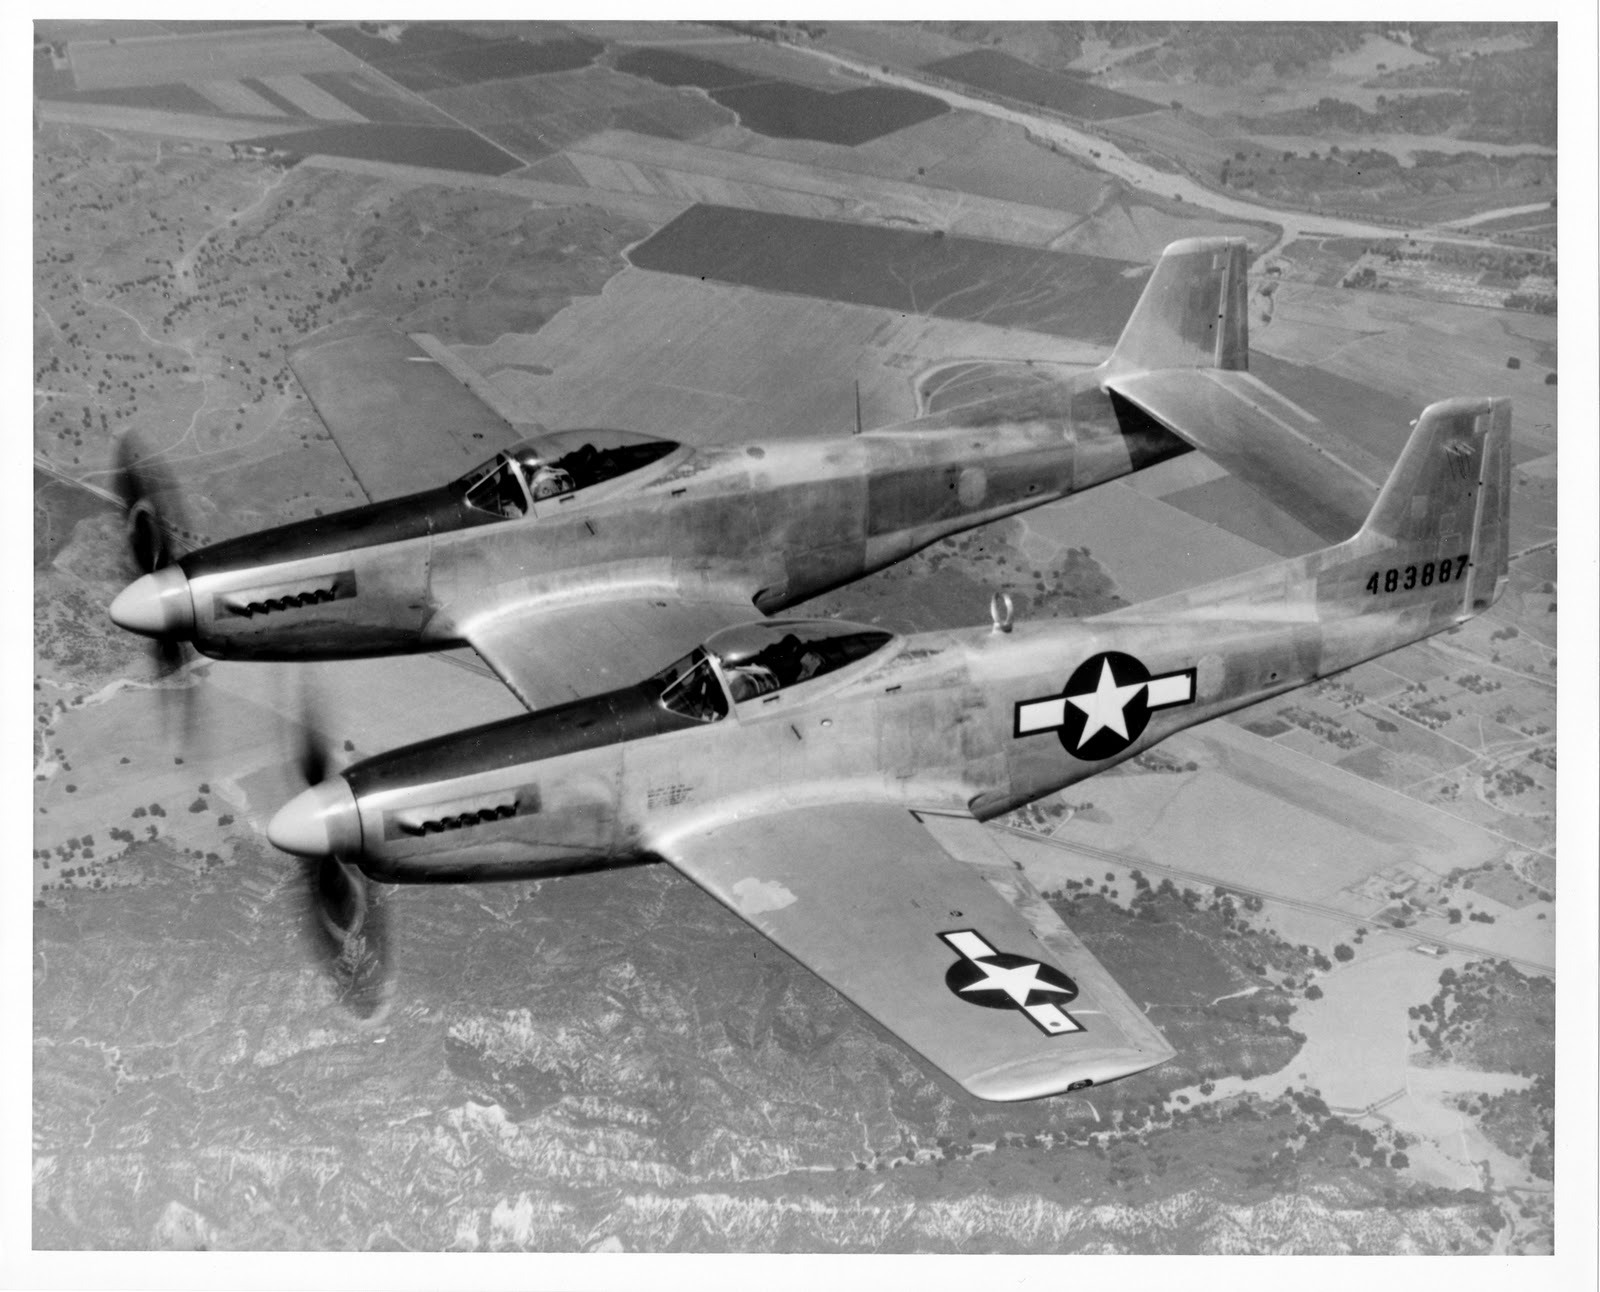 Super-Rare XP-82 Twin Mustang Flies Again